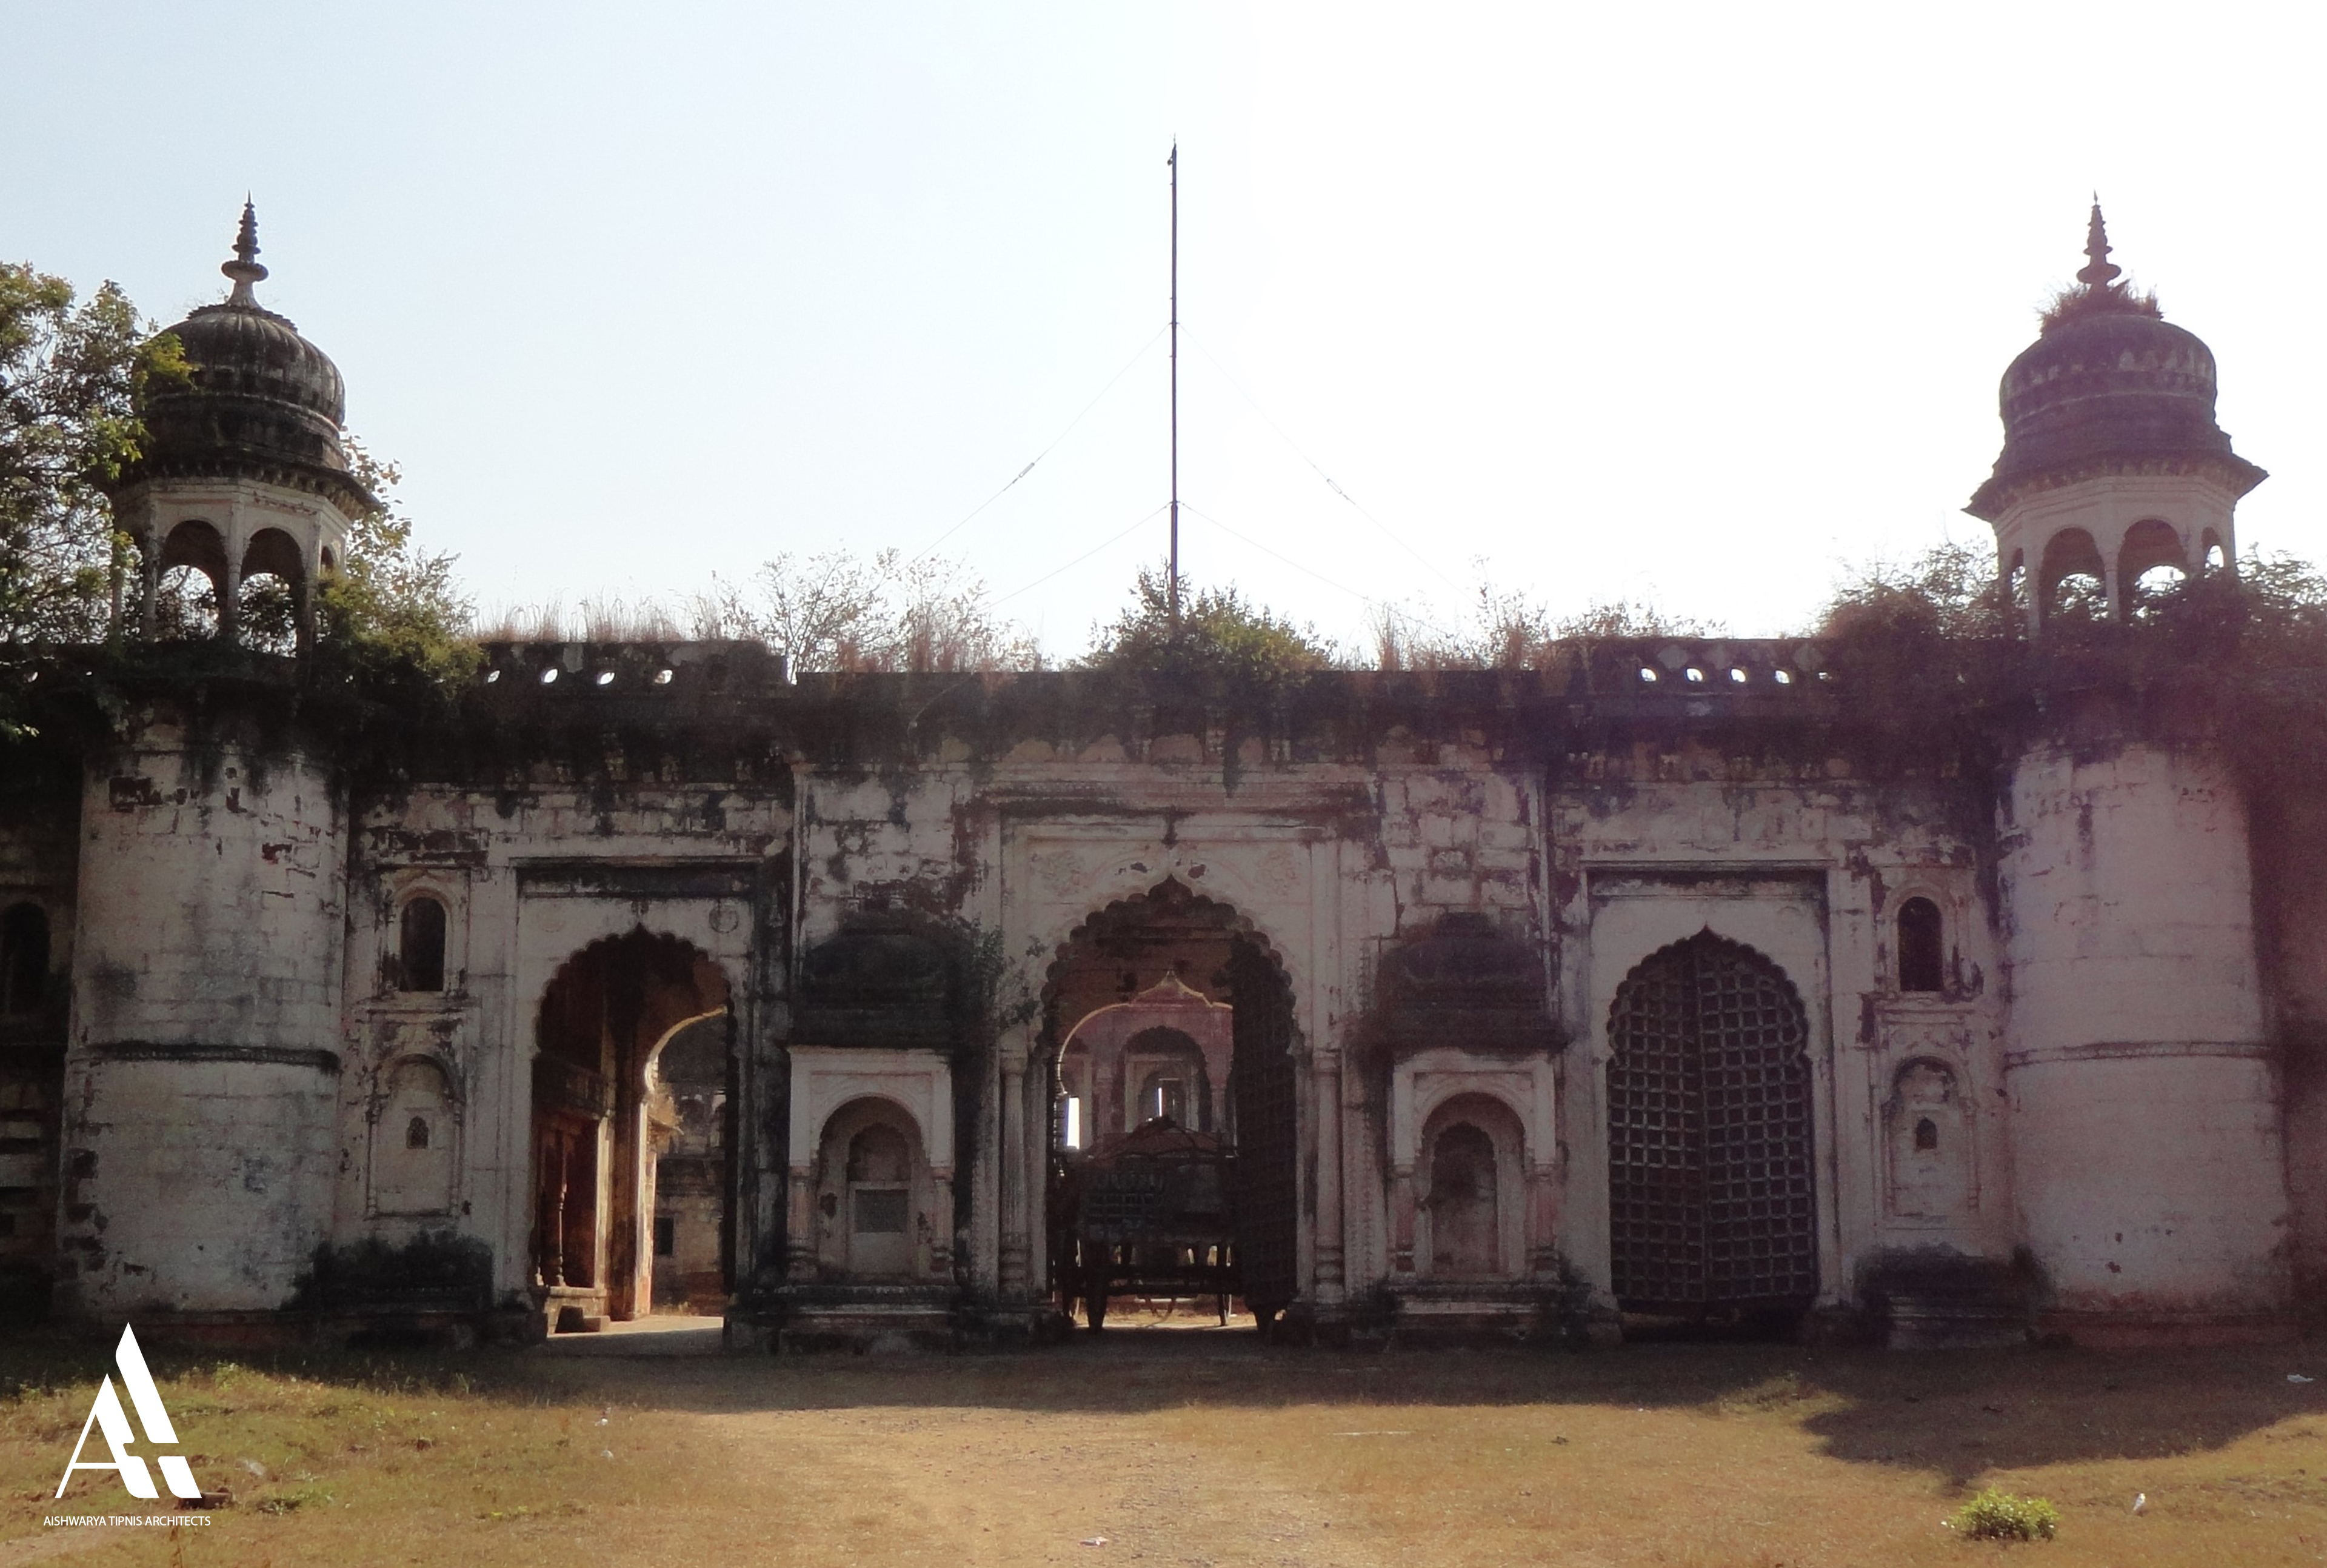 Restoration & Adaptive Reuse of Govindgarh Fort